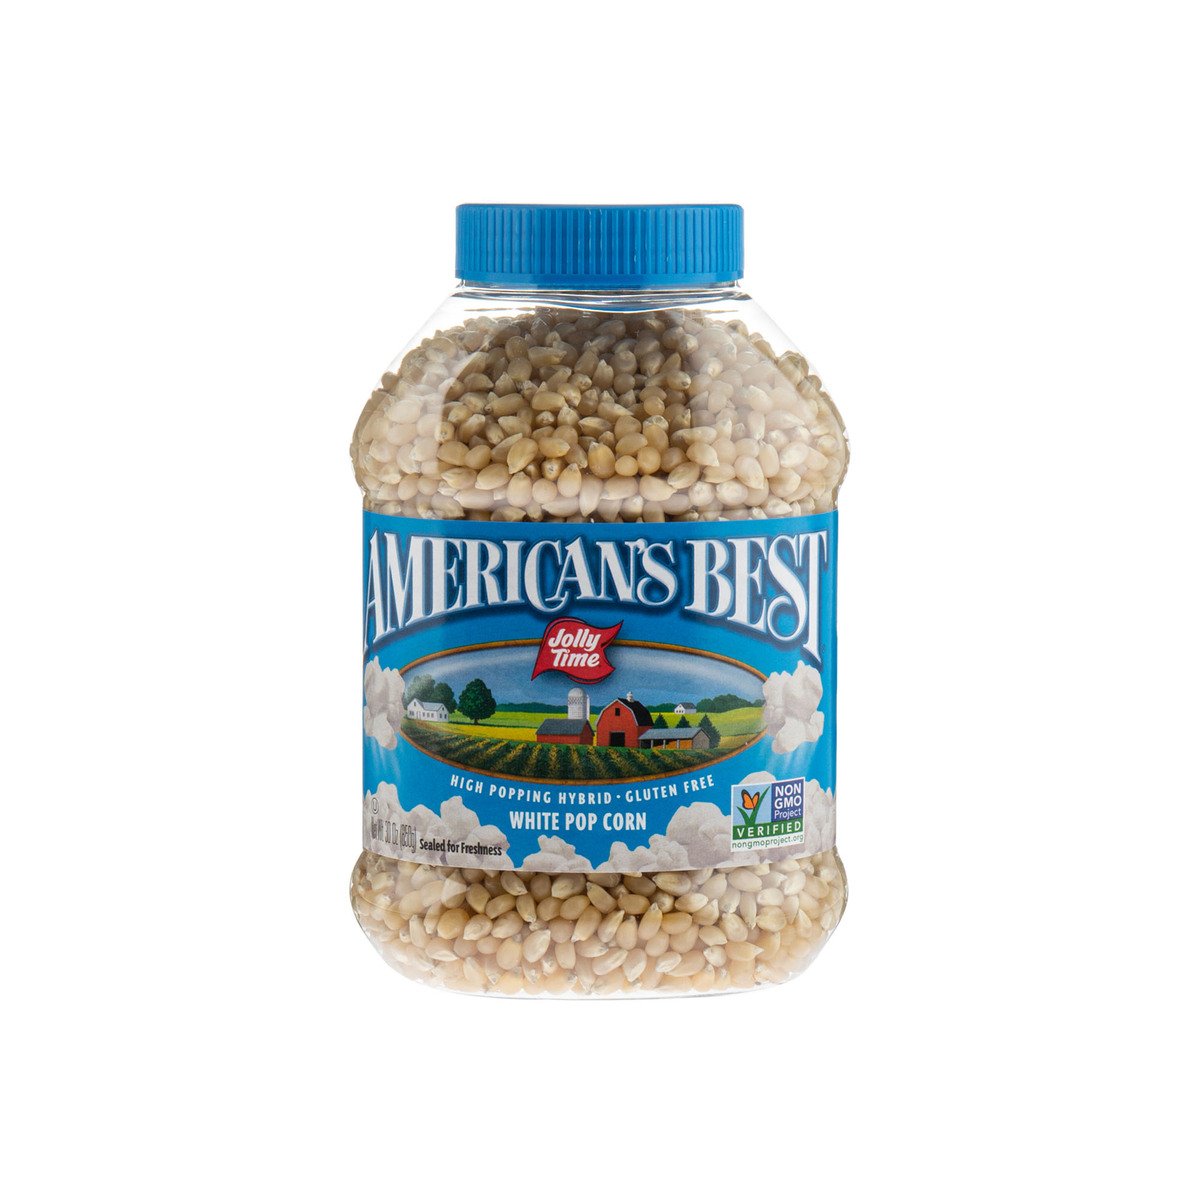 Jolly Time Americans Best White Pop Corn 850g